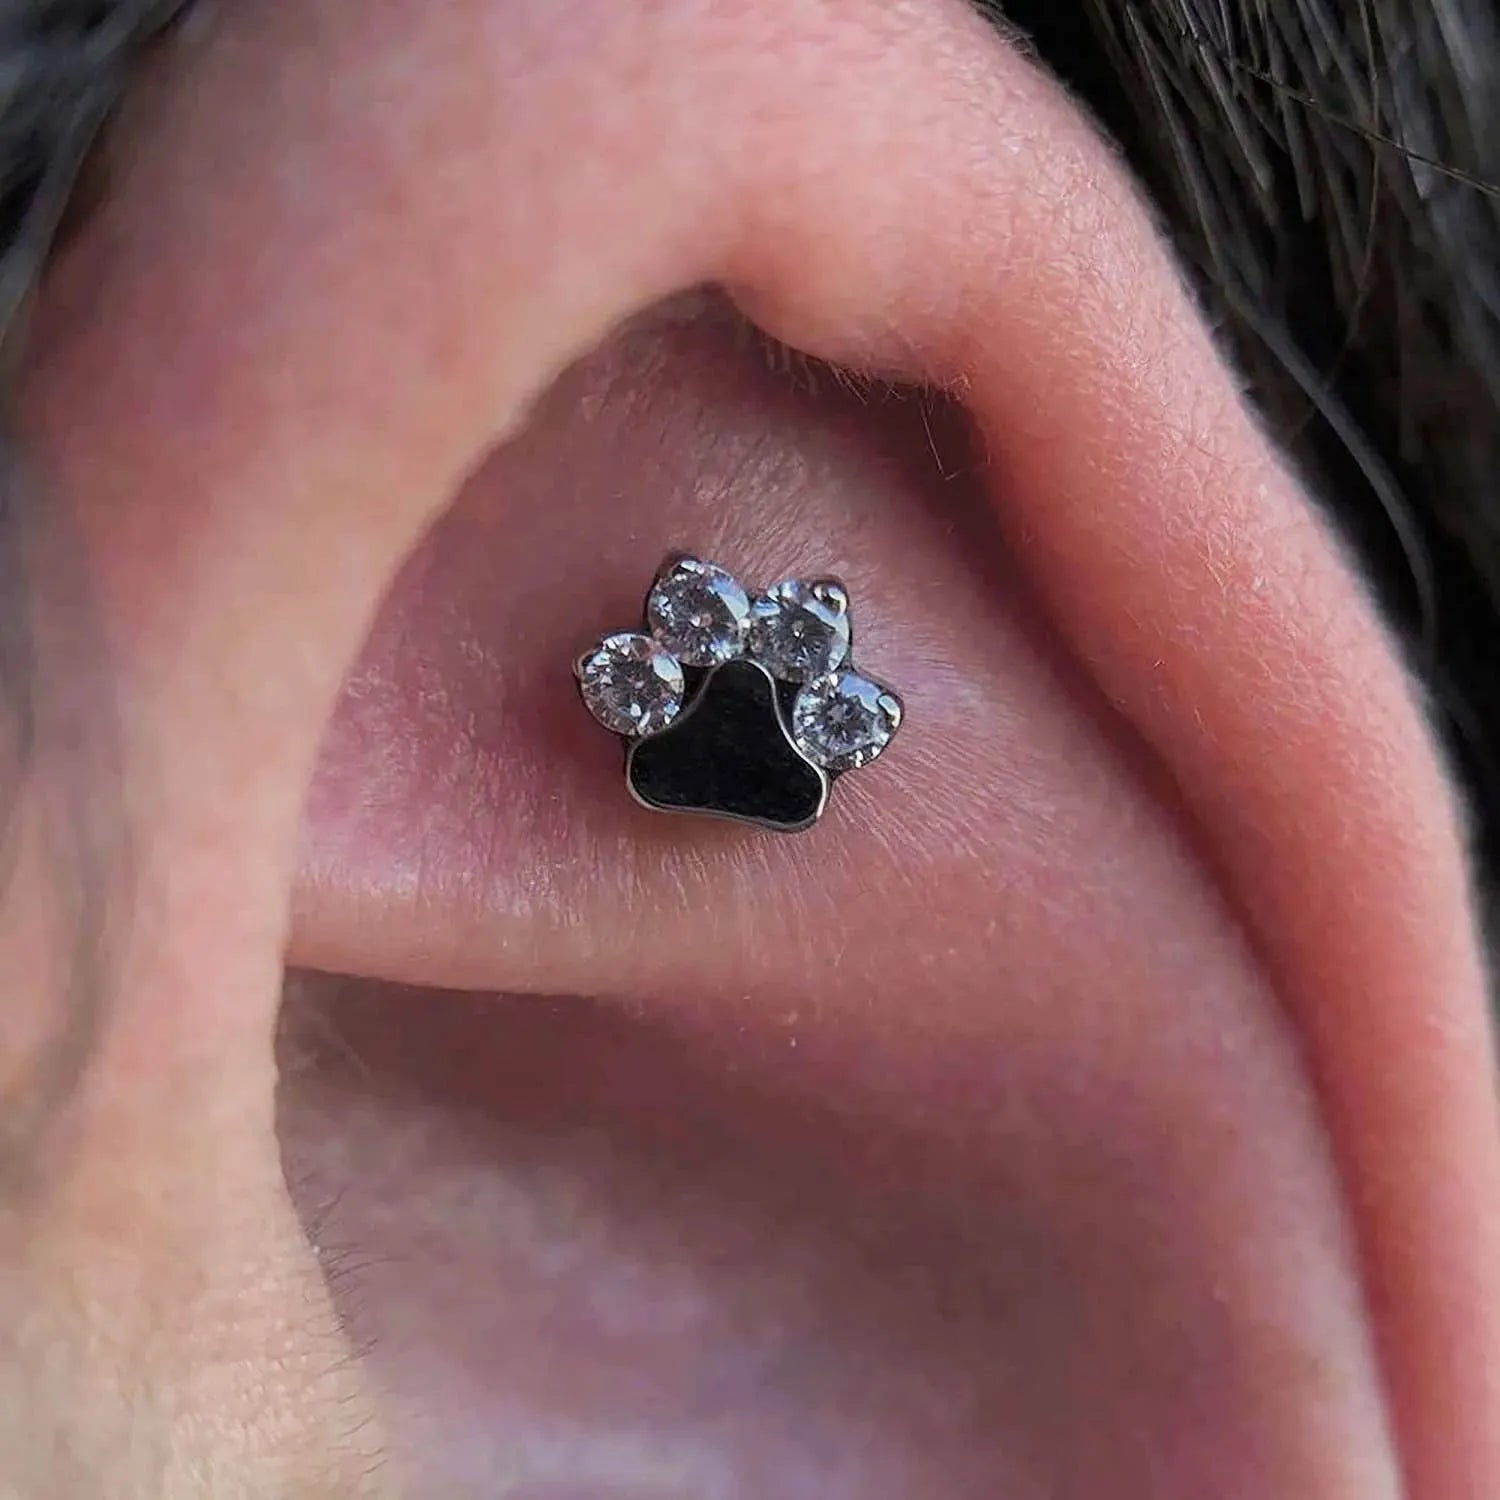 Implant-Grade Titanium White Diamond Paw Flat Back Earring